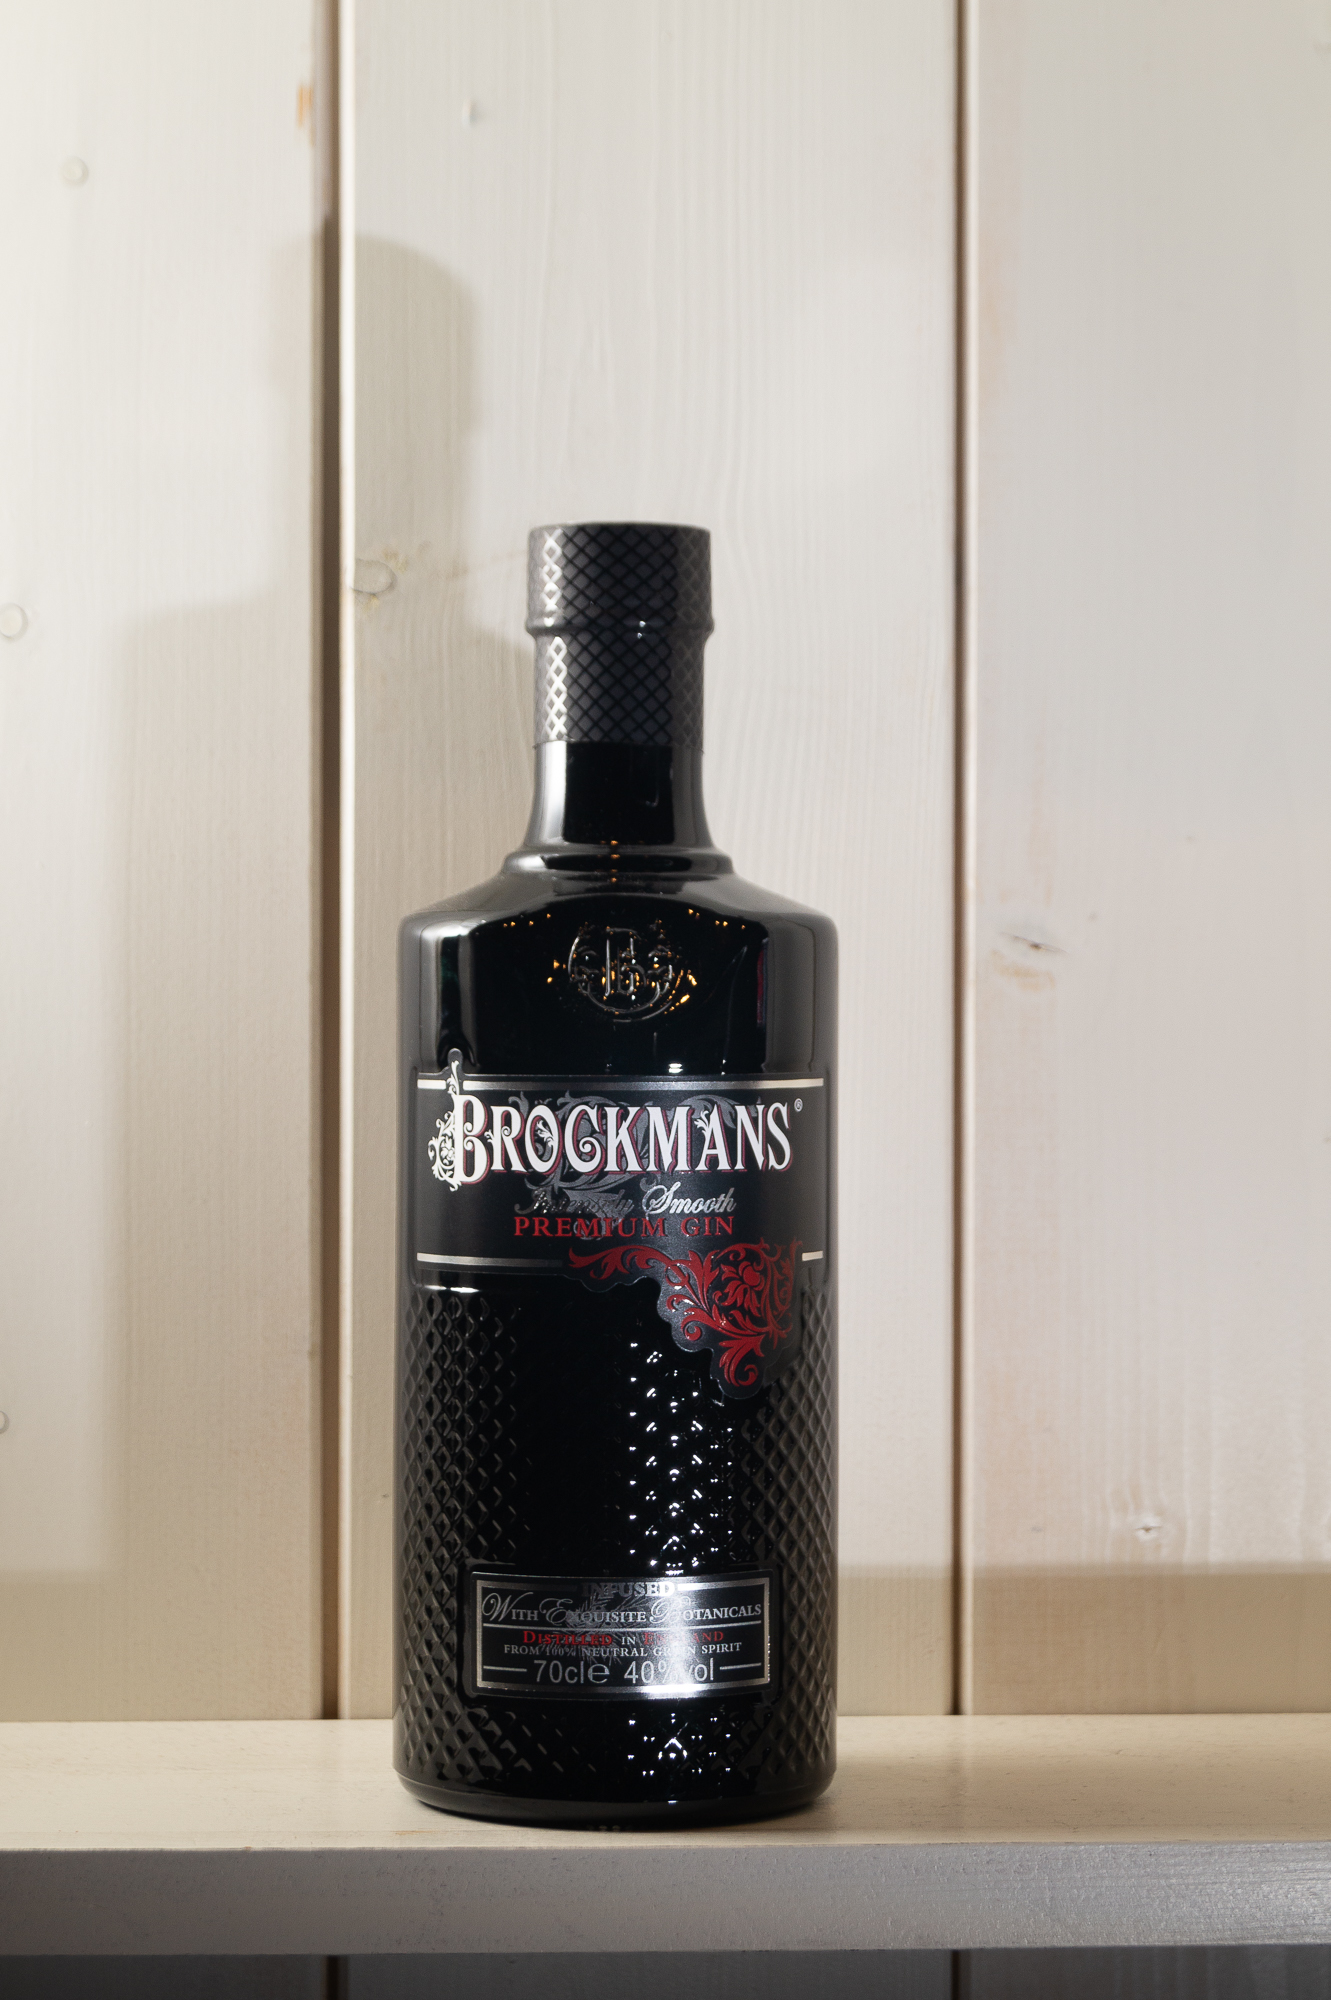 Brockmans Intensly Smoothe Premium Gin 